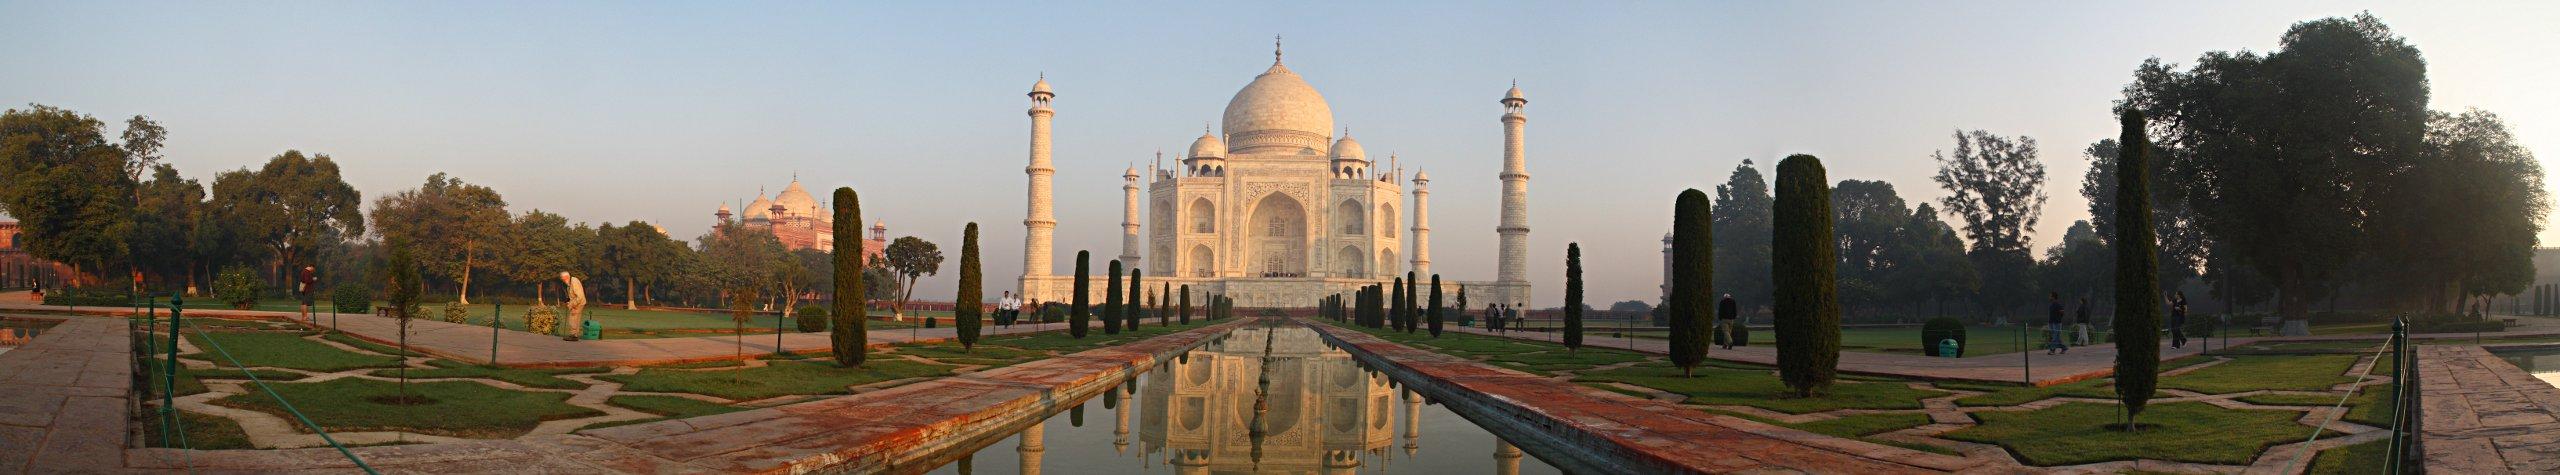 Taj Mahal: El amor por una esposa